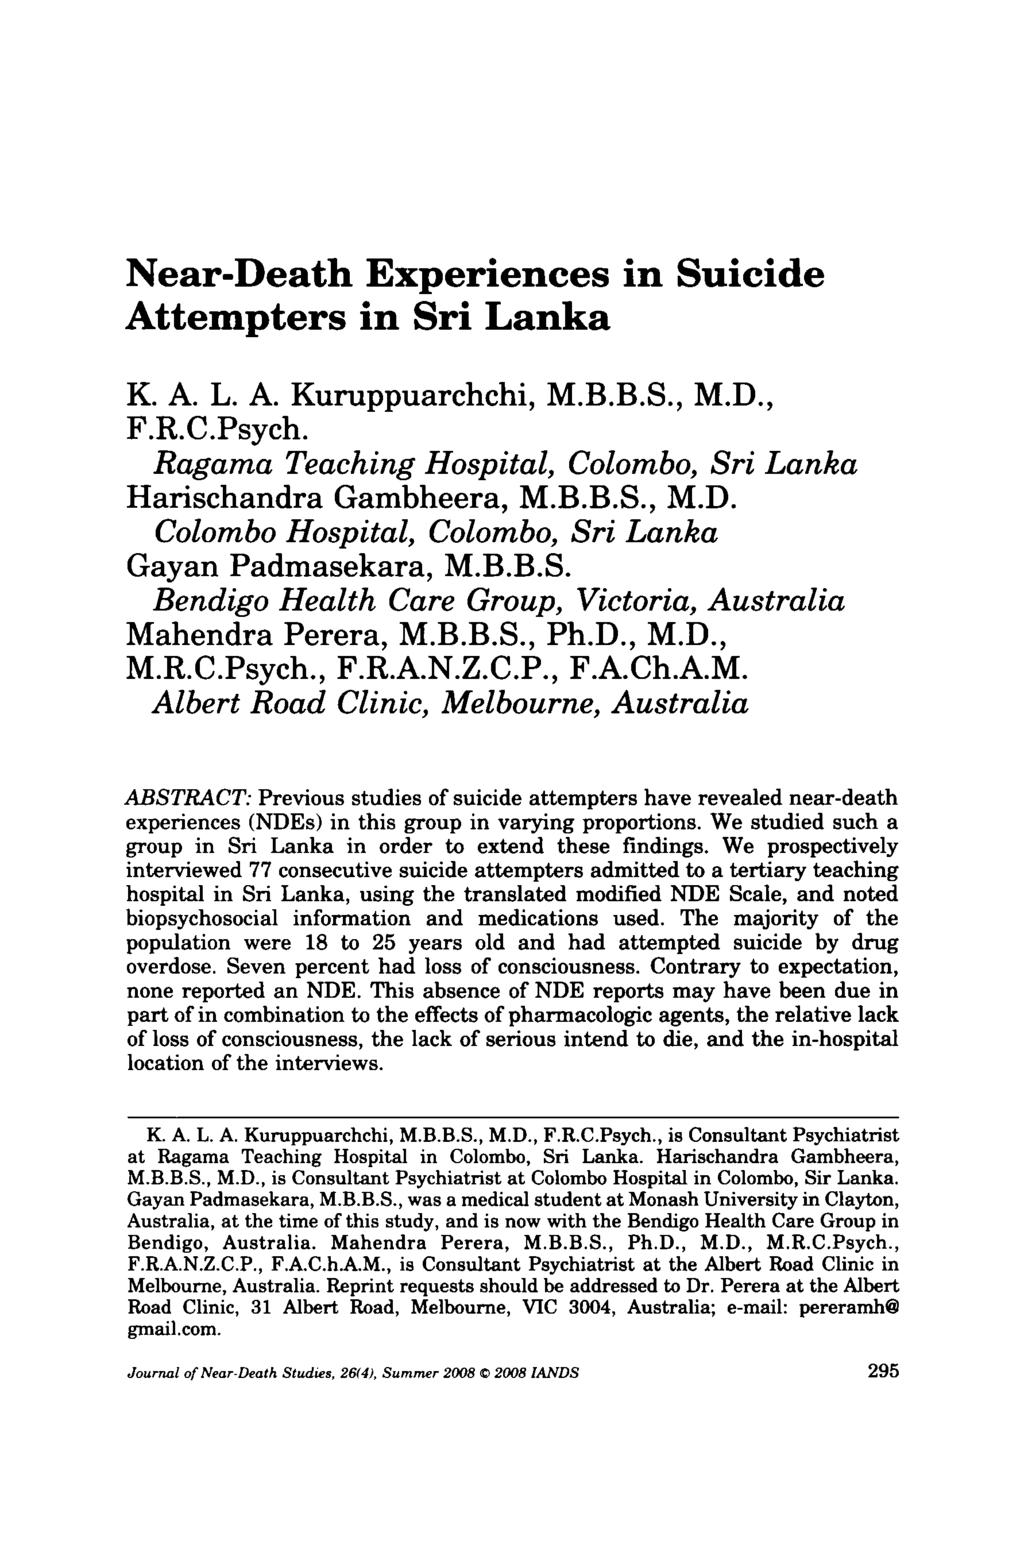 Near-Death Experiences in Suicide Attempters in Sri Lanka K. A. L. A. Kuruppuarchchi, M.B.B.S., M.D., F.R.C.Psych. Ragama Teaching Hospital, Colombo, Sri Lanka Harischandra Gambheera, M.B.B.S., M.D. Colombo Hospital, Colombo, Sri Lanka Gayan Padmasekara, M.